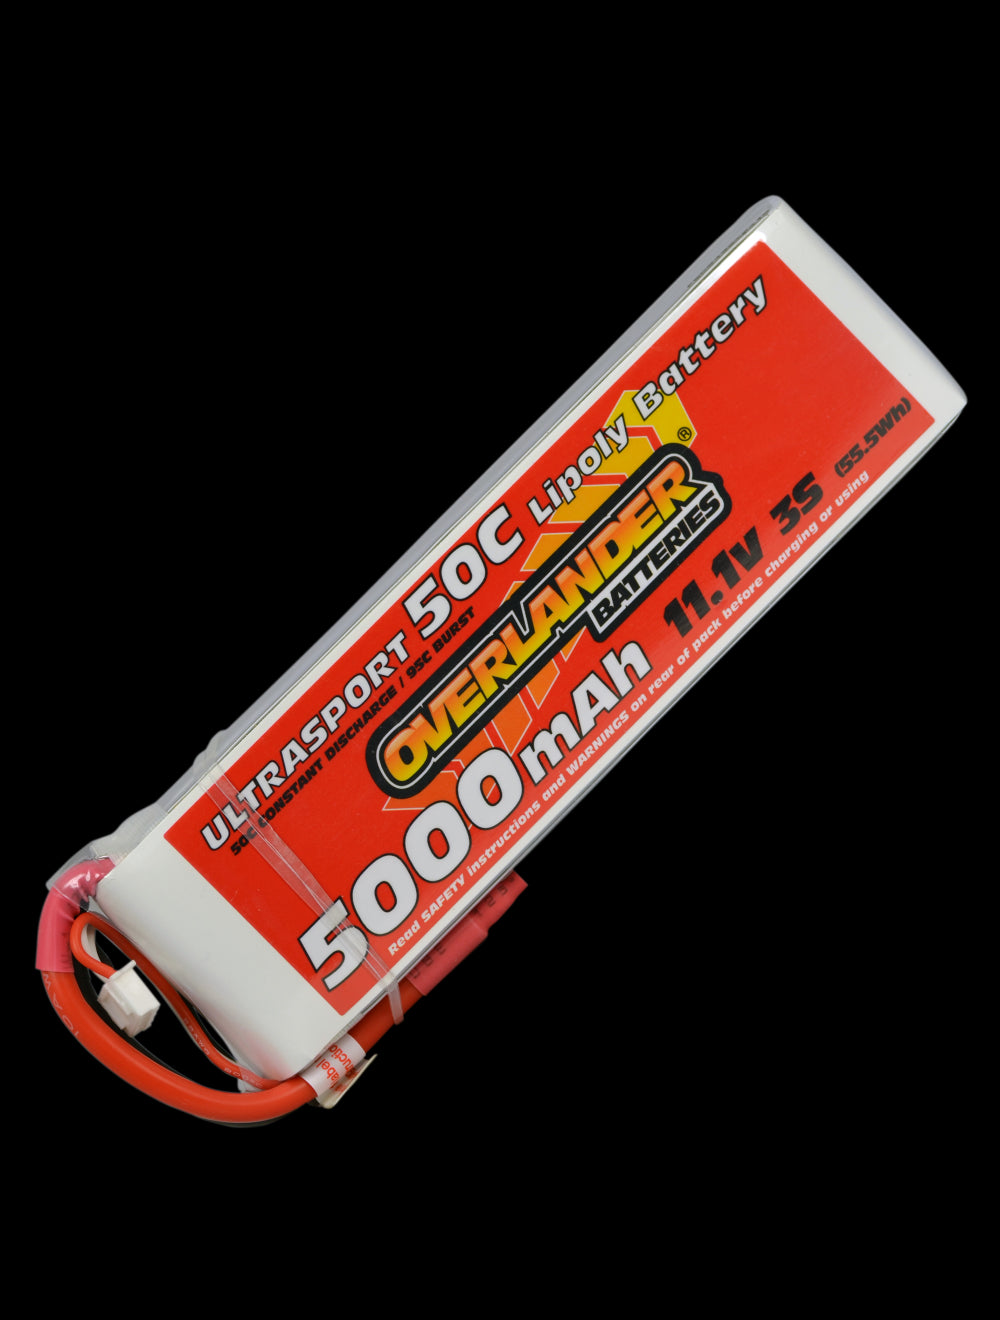 Overlander 5000mAh 11.1V 3S 50C Ultrasport LiPo Battery - Deans Connector 2631